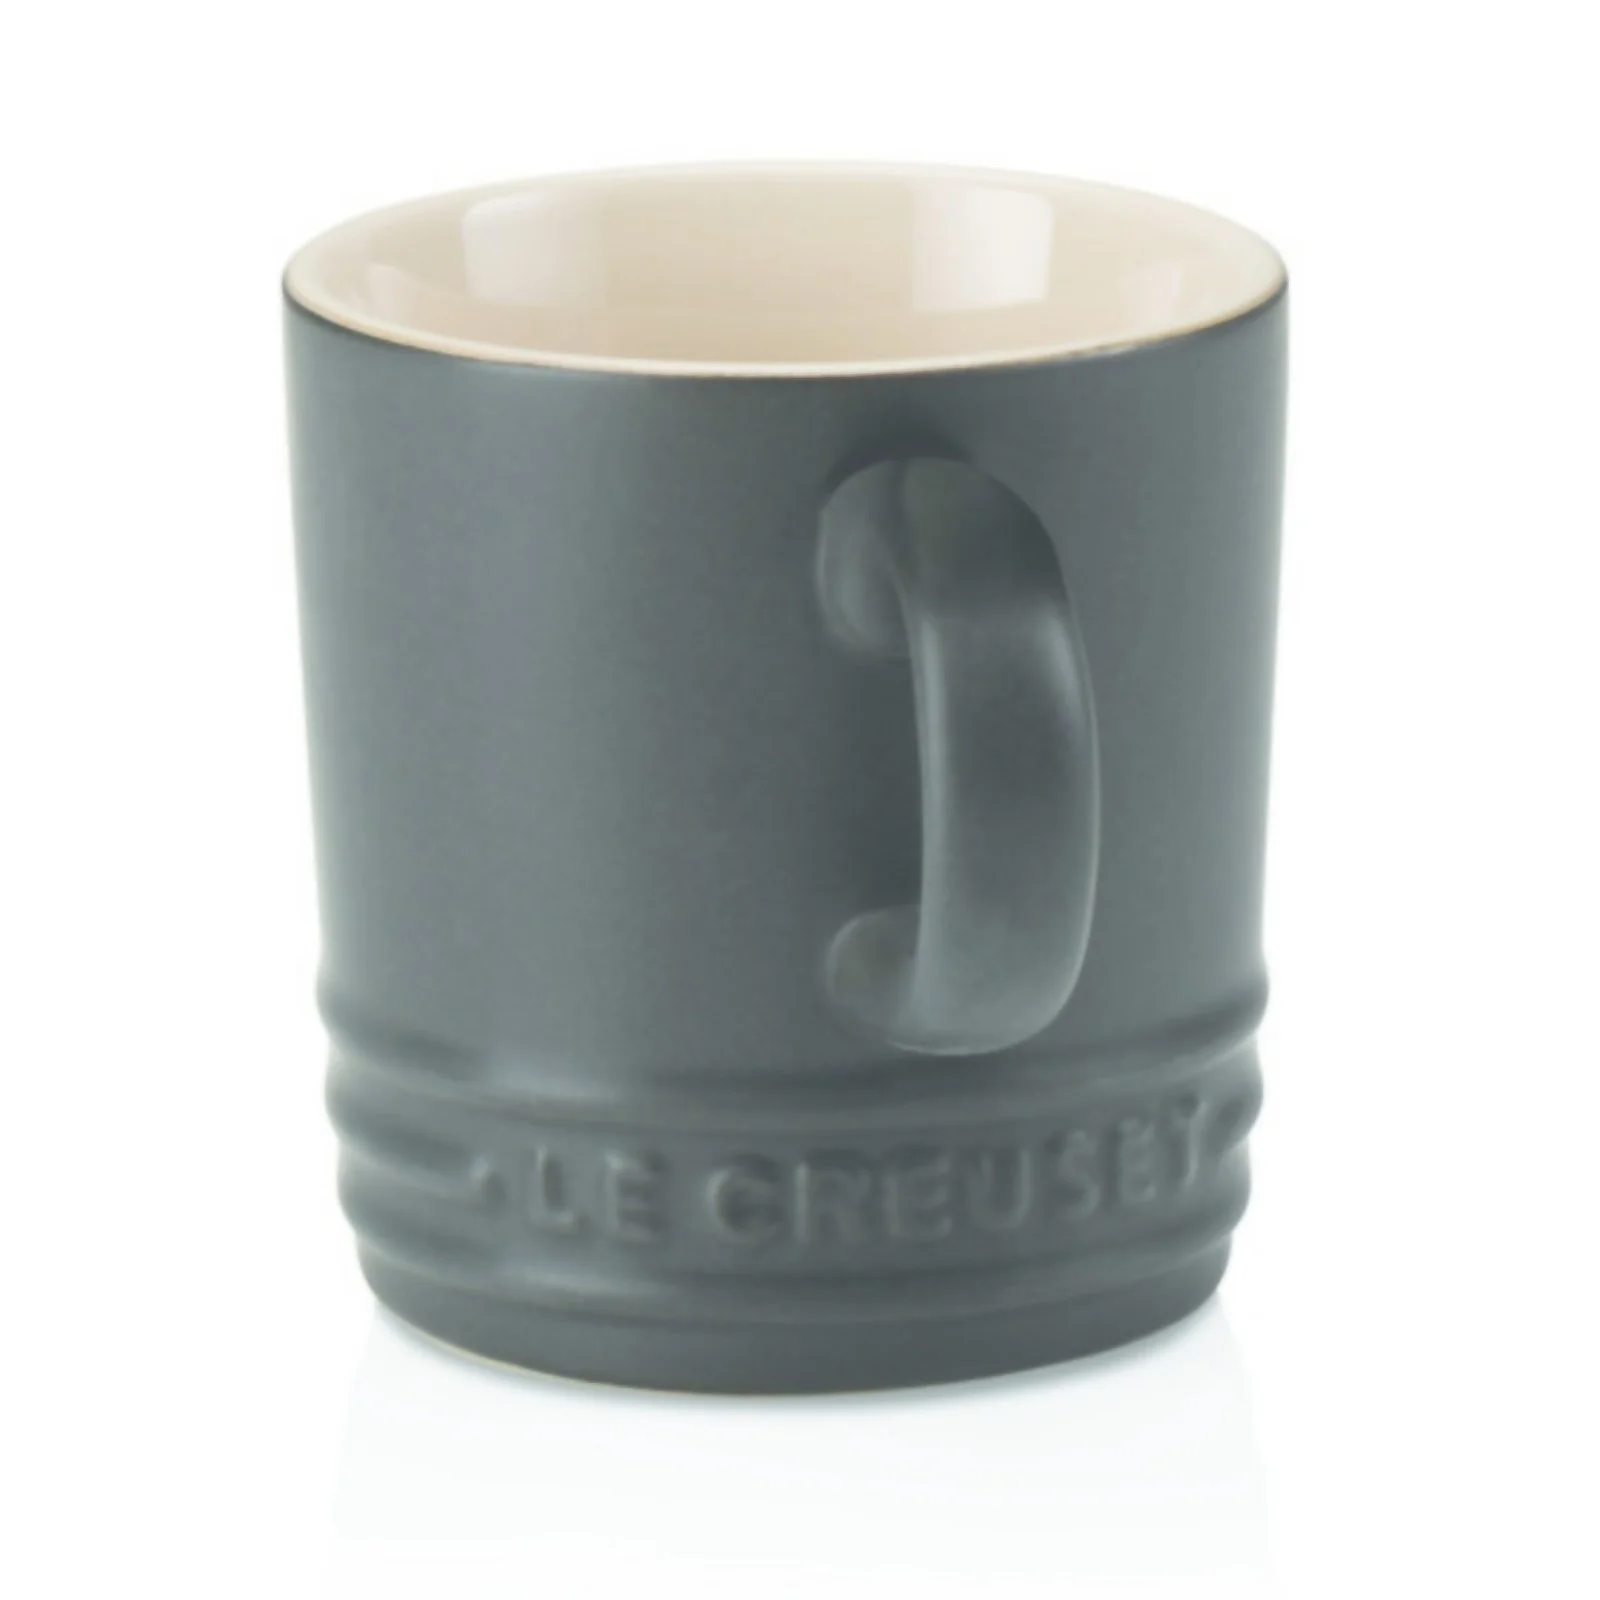 Le Creuset Stoneware Espresso Mug - 100ml - Flint Image 1